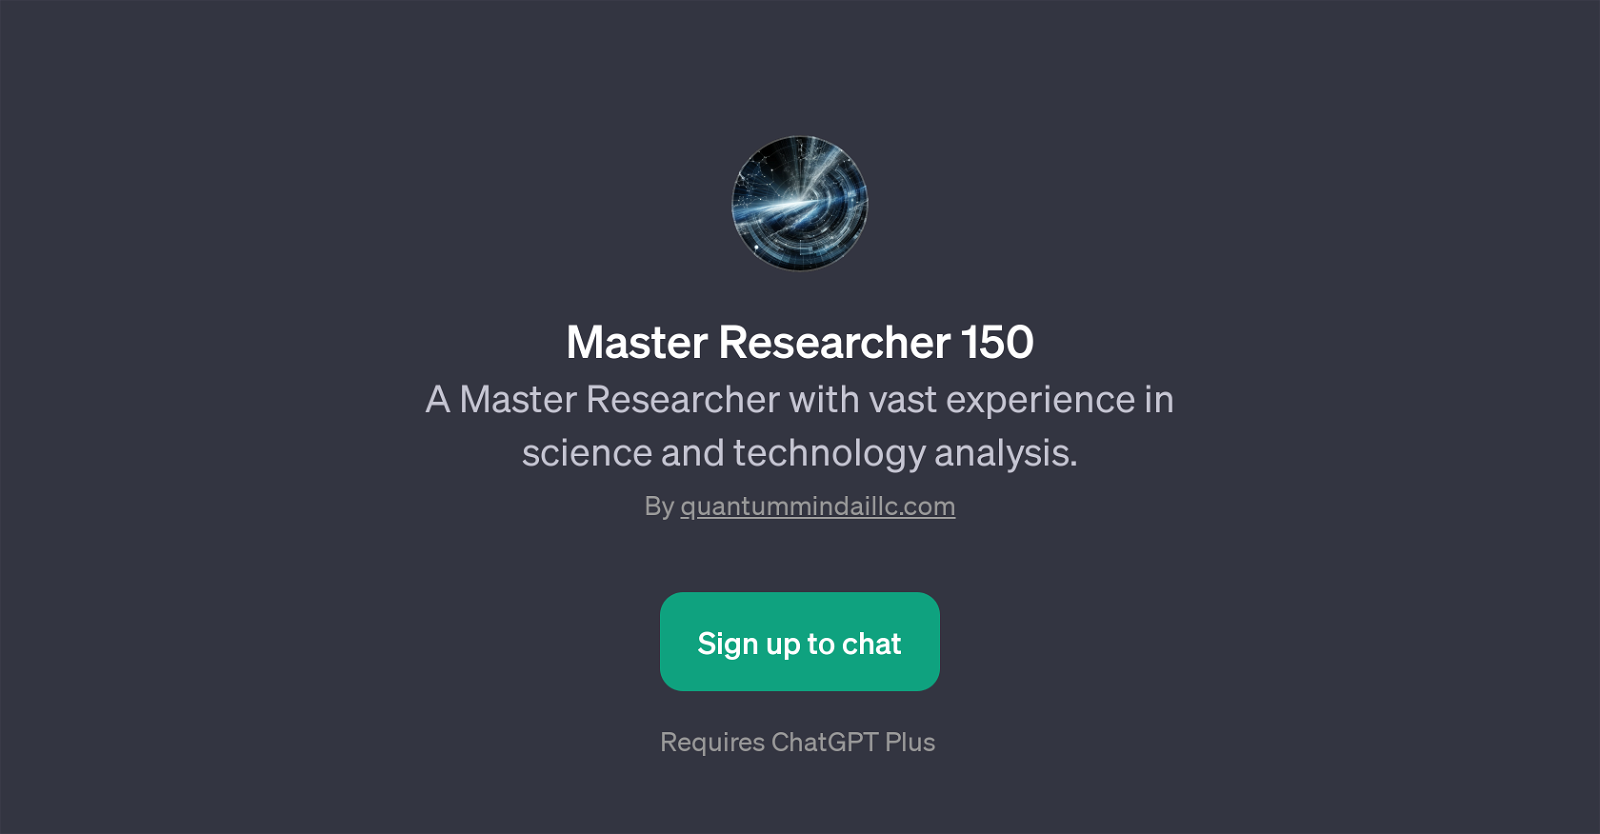 Master Researcher 150 website